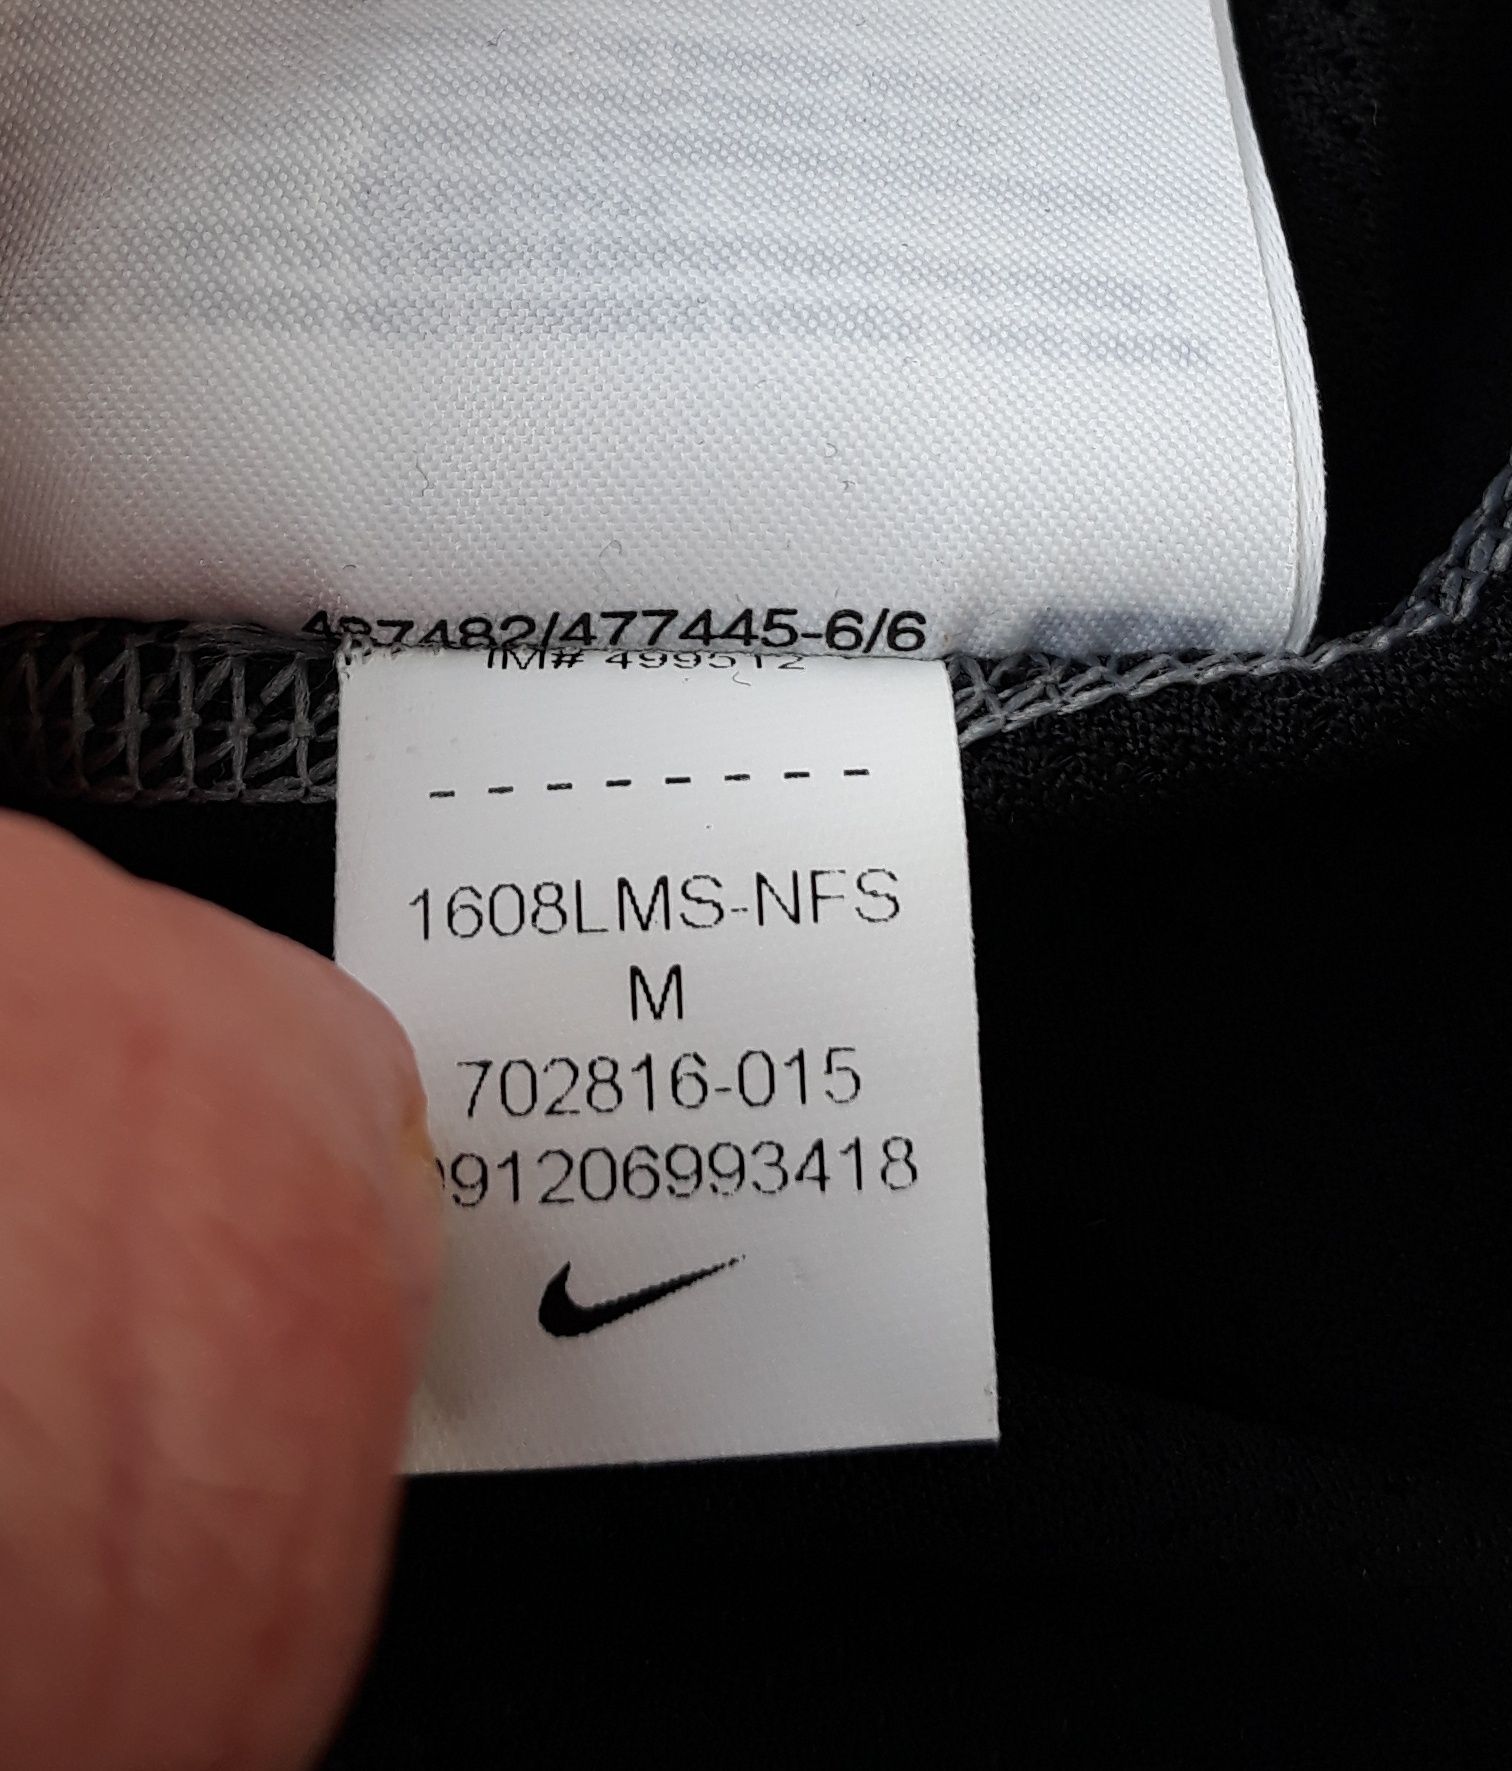 Bluza Nike pro combat de compresie